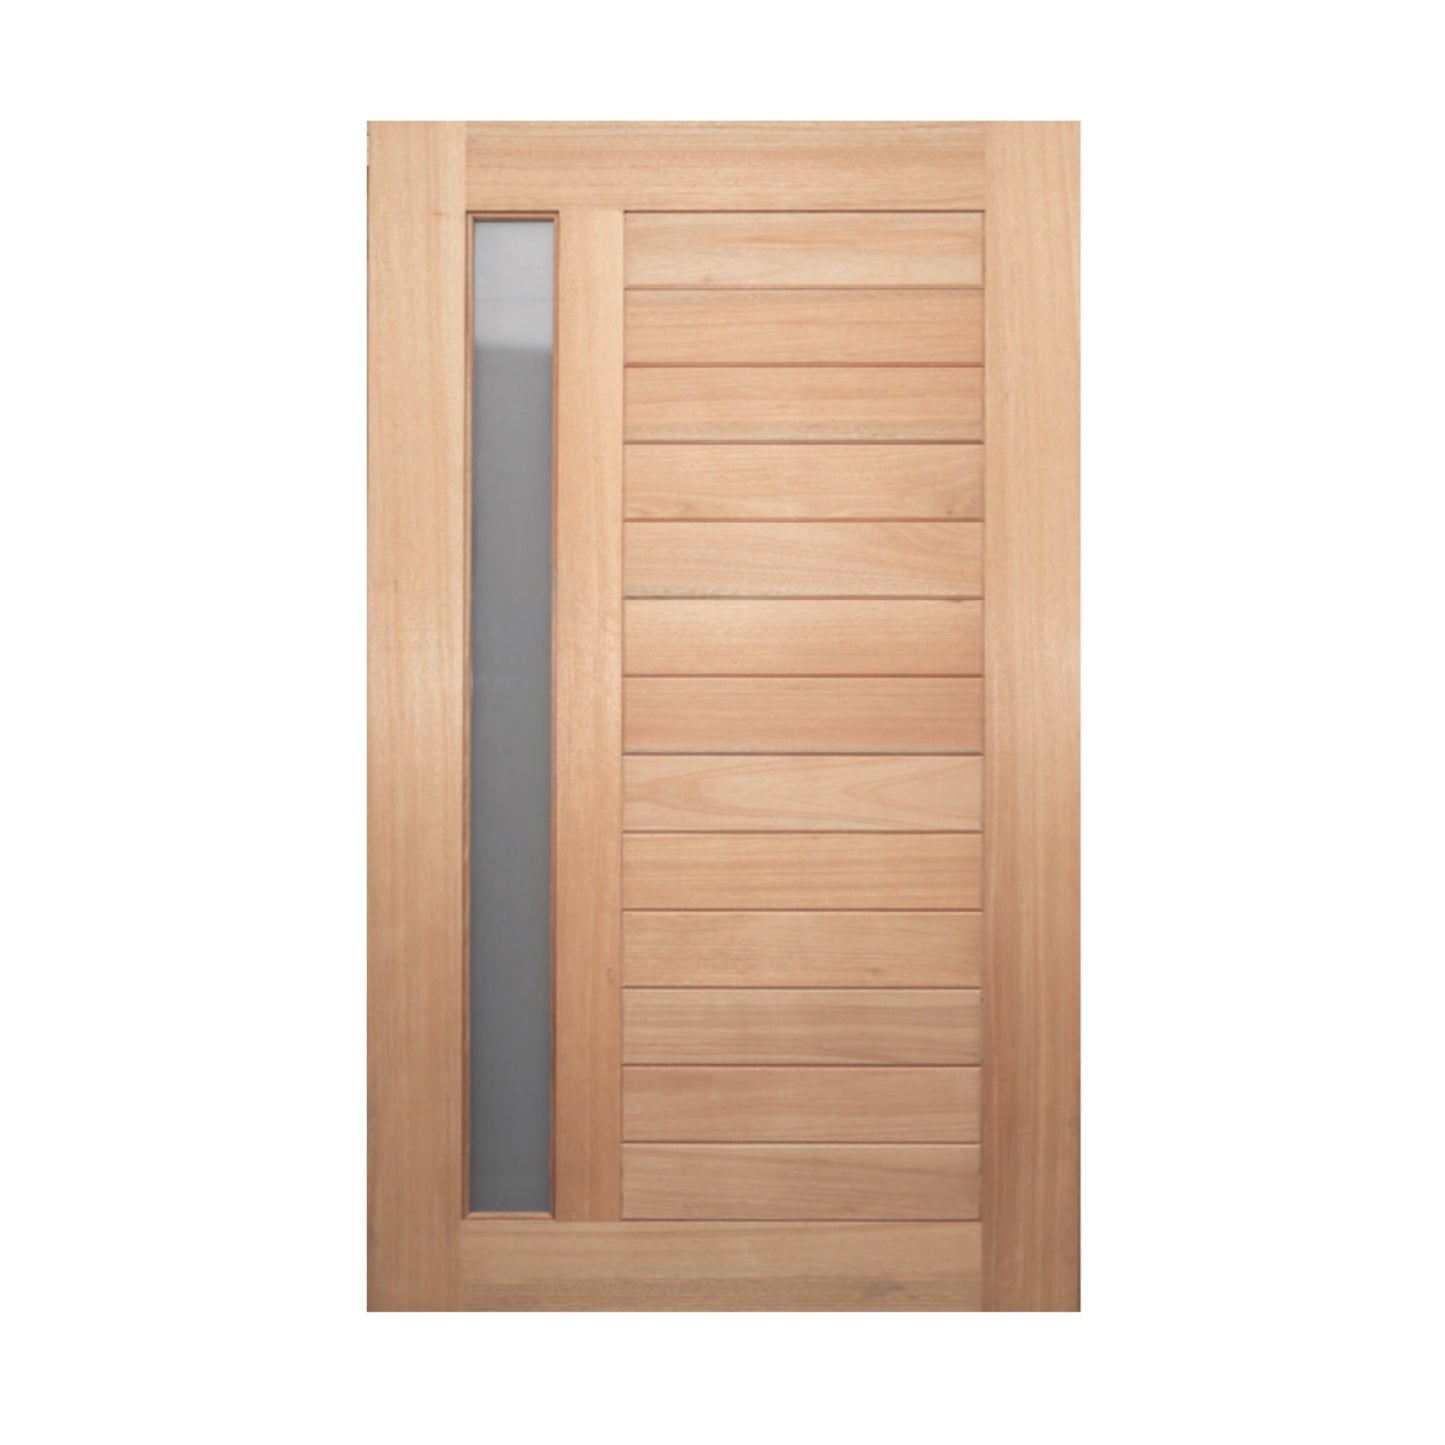 FS-VG 1 Lite Horizontal Plank 1200 Door & Frame Package